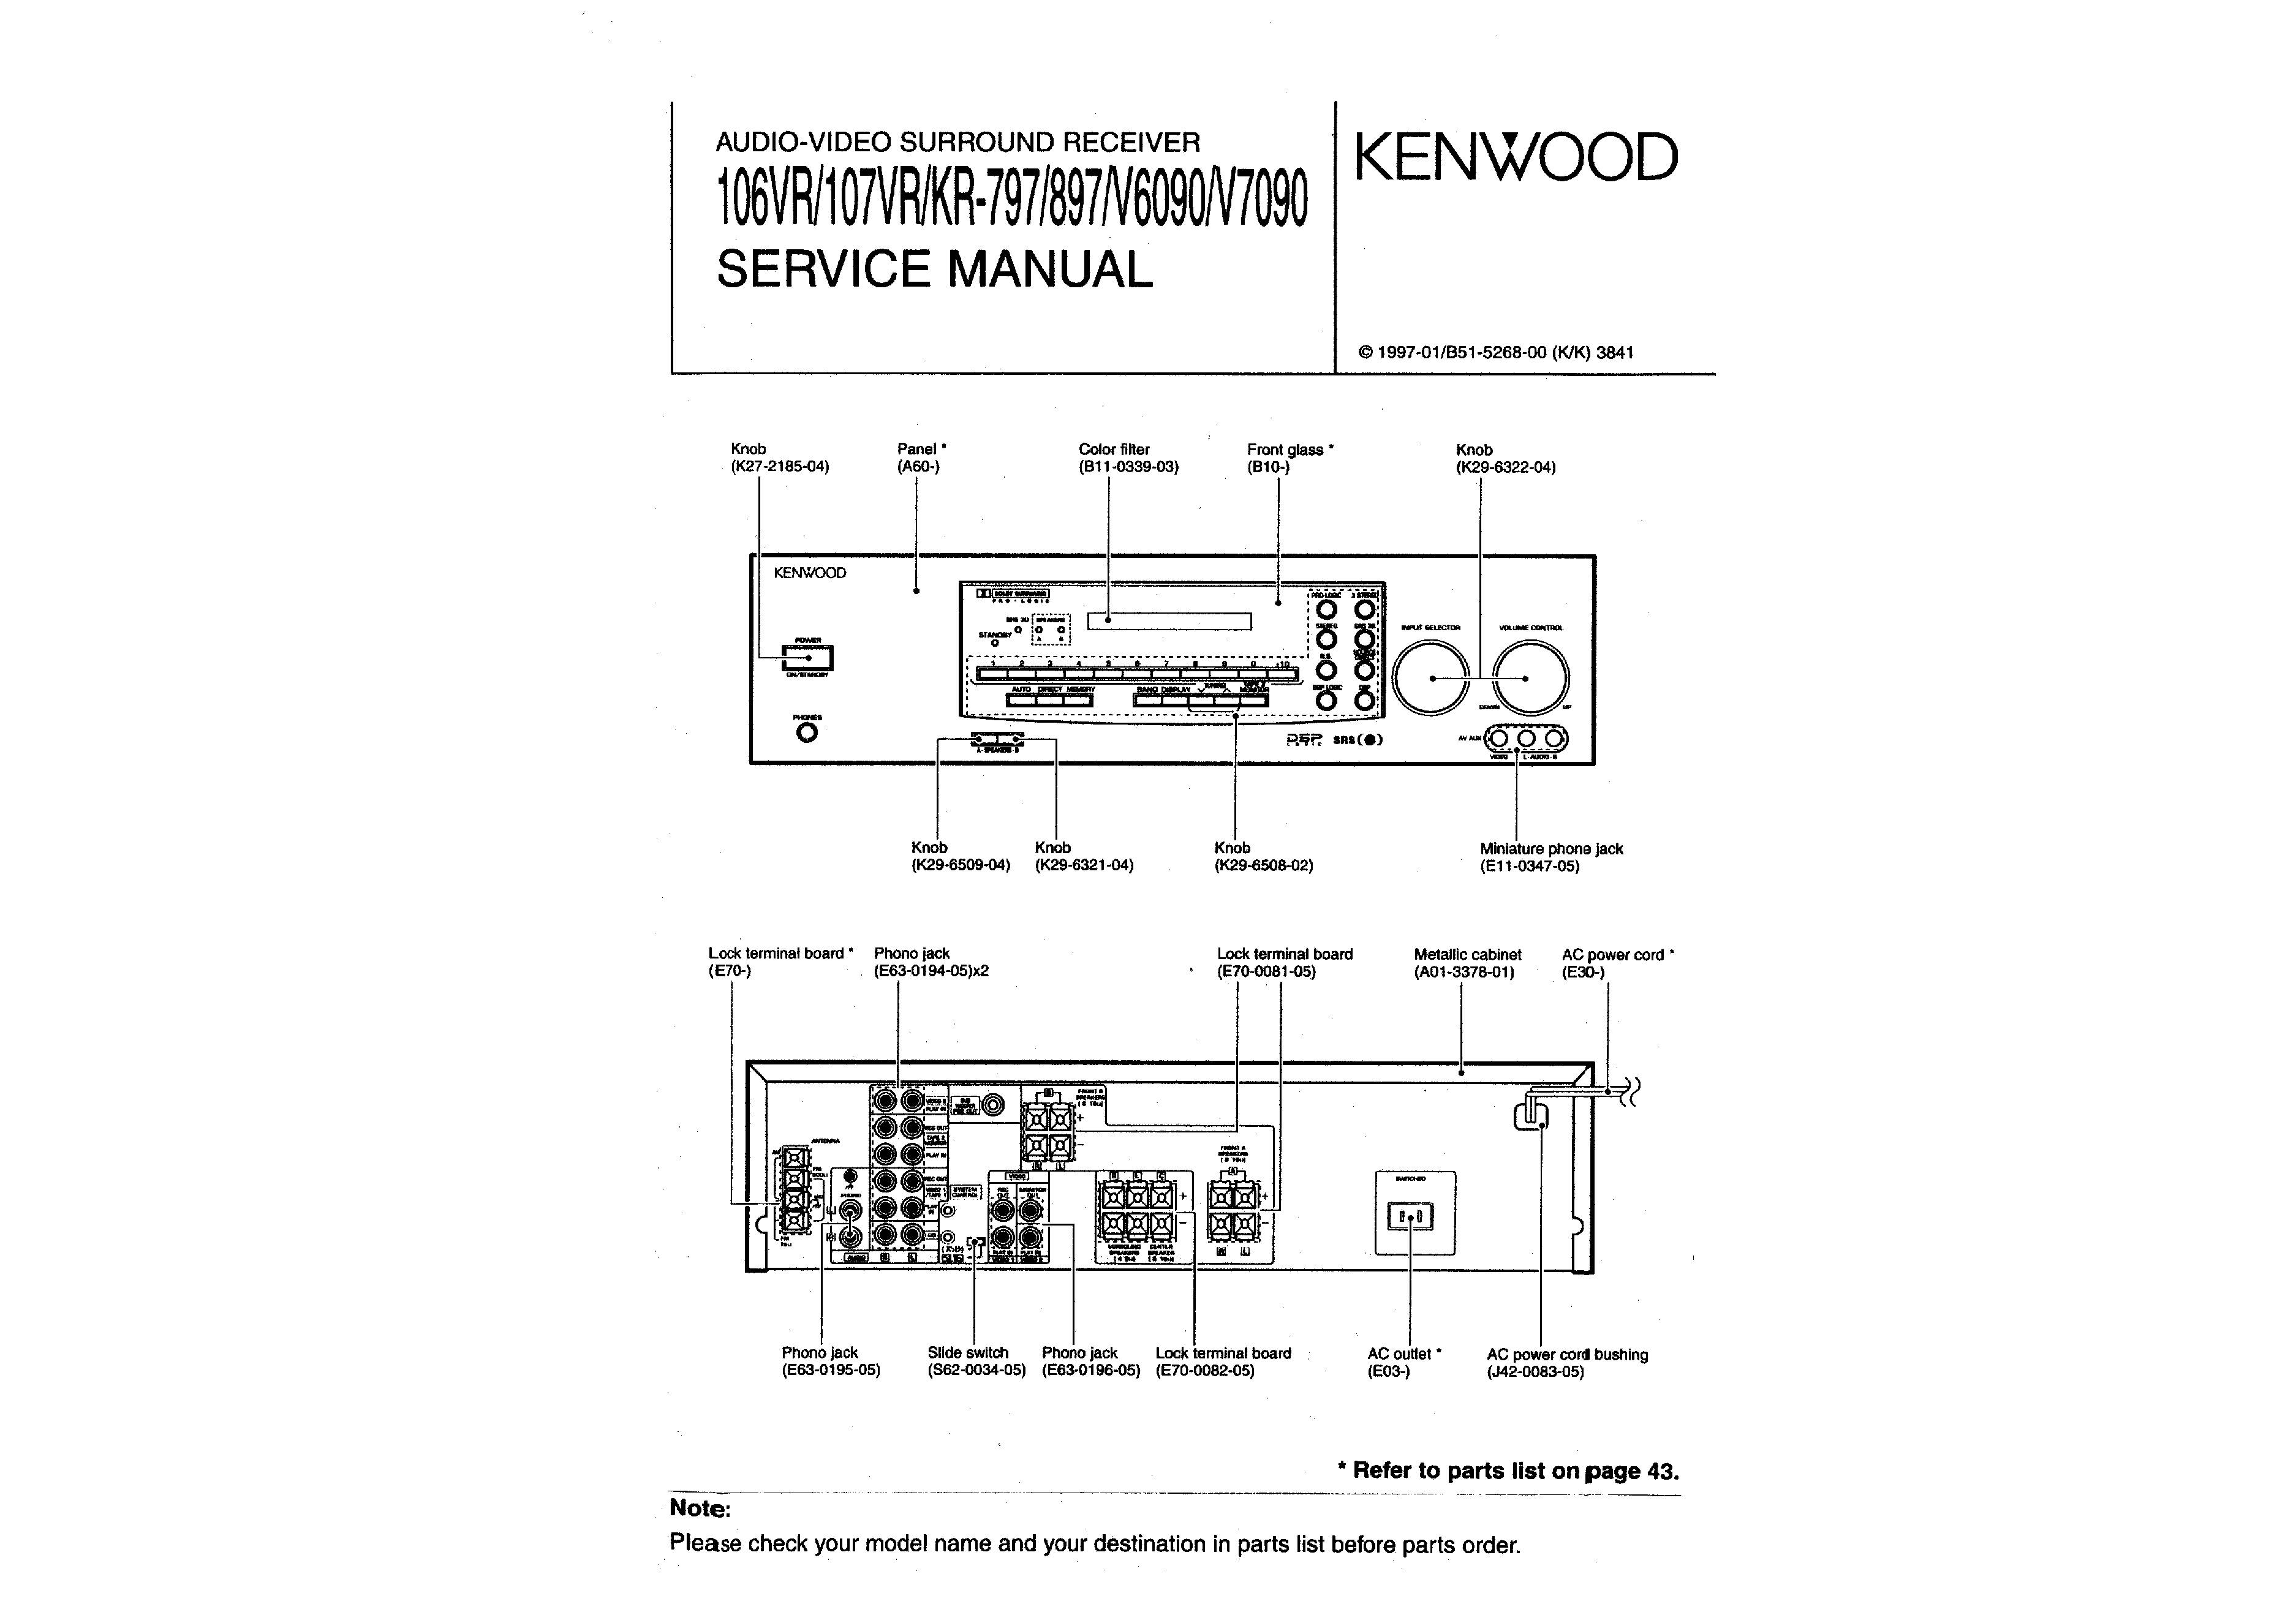 Kenwood KR-797